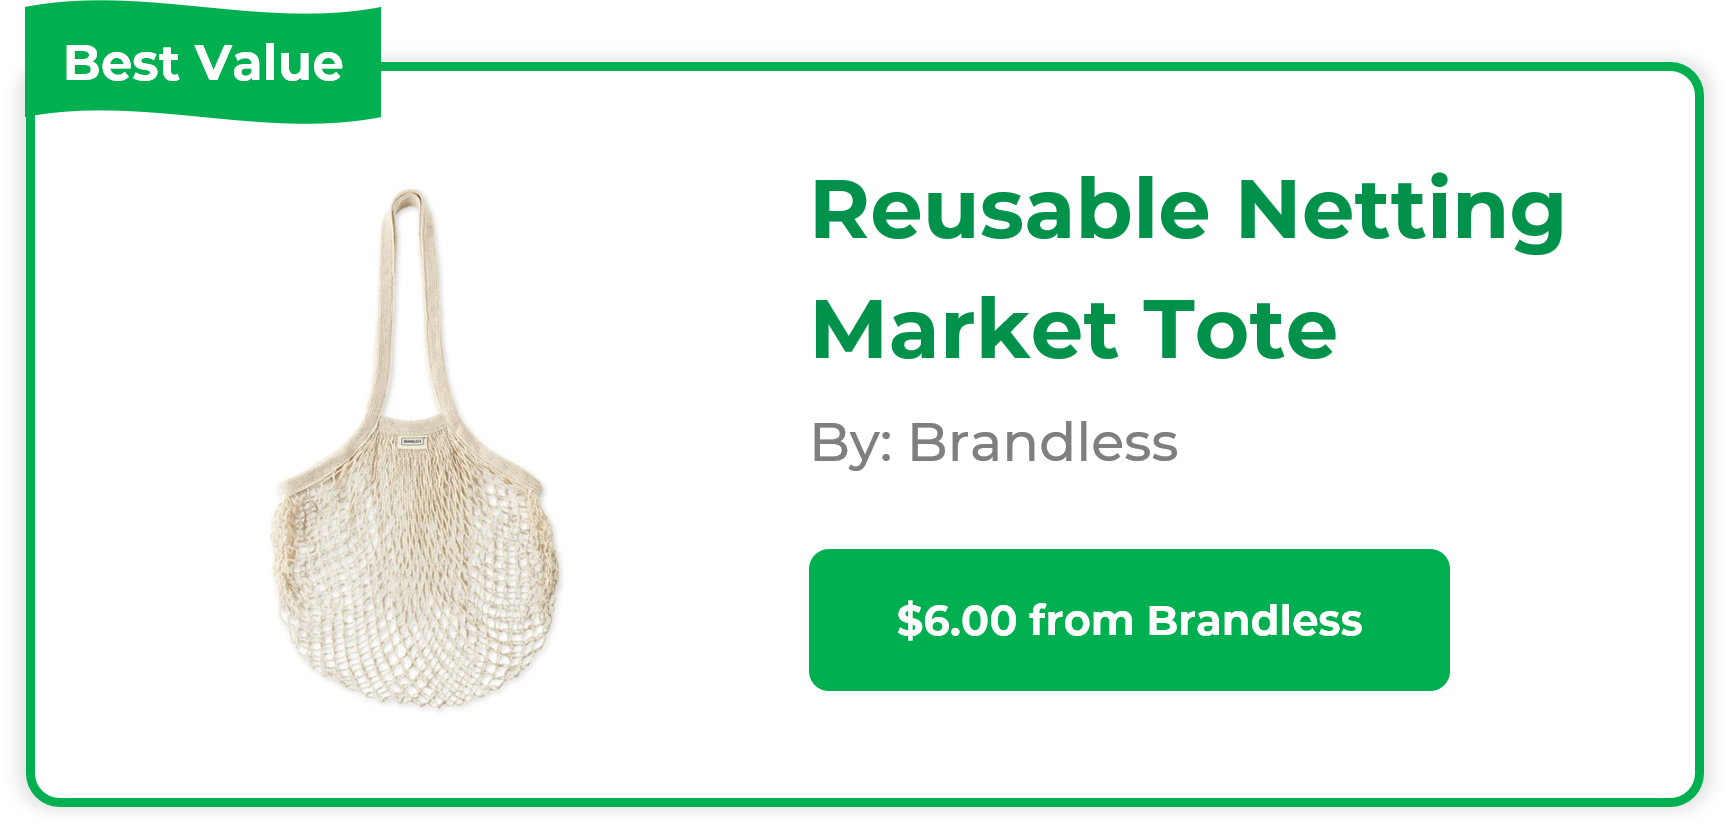 Reusable Netting Market Tote - Brandless